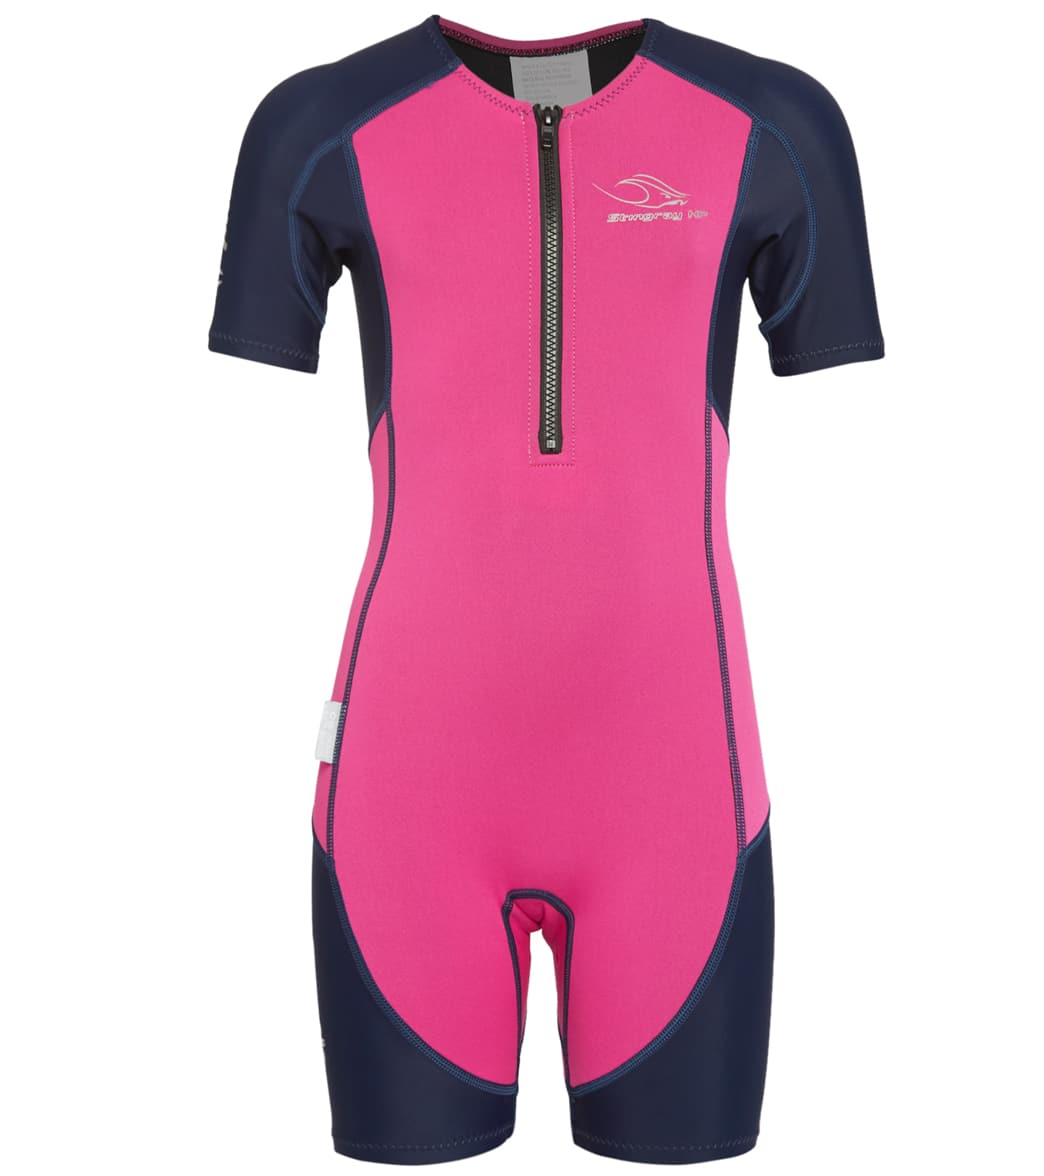 AquaSphere Girls' Stingray Short Sleeve Thermal Suit at